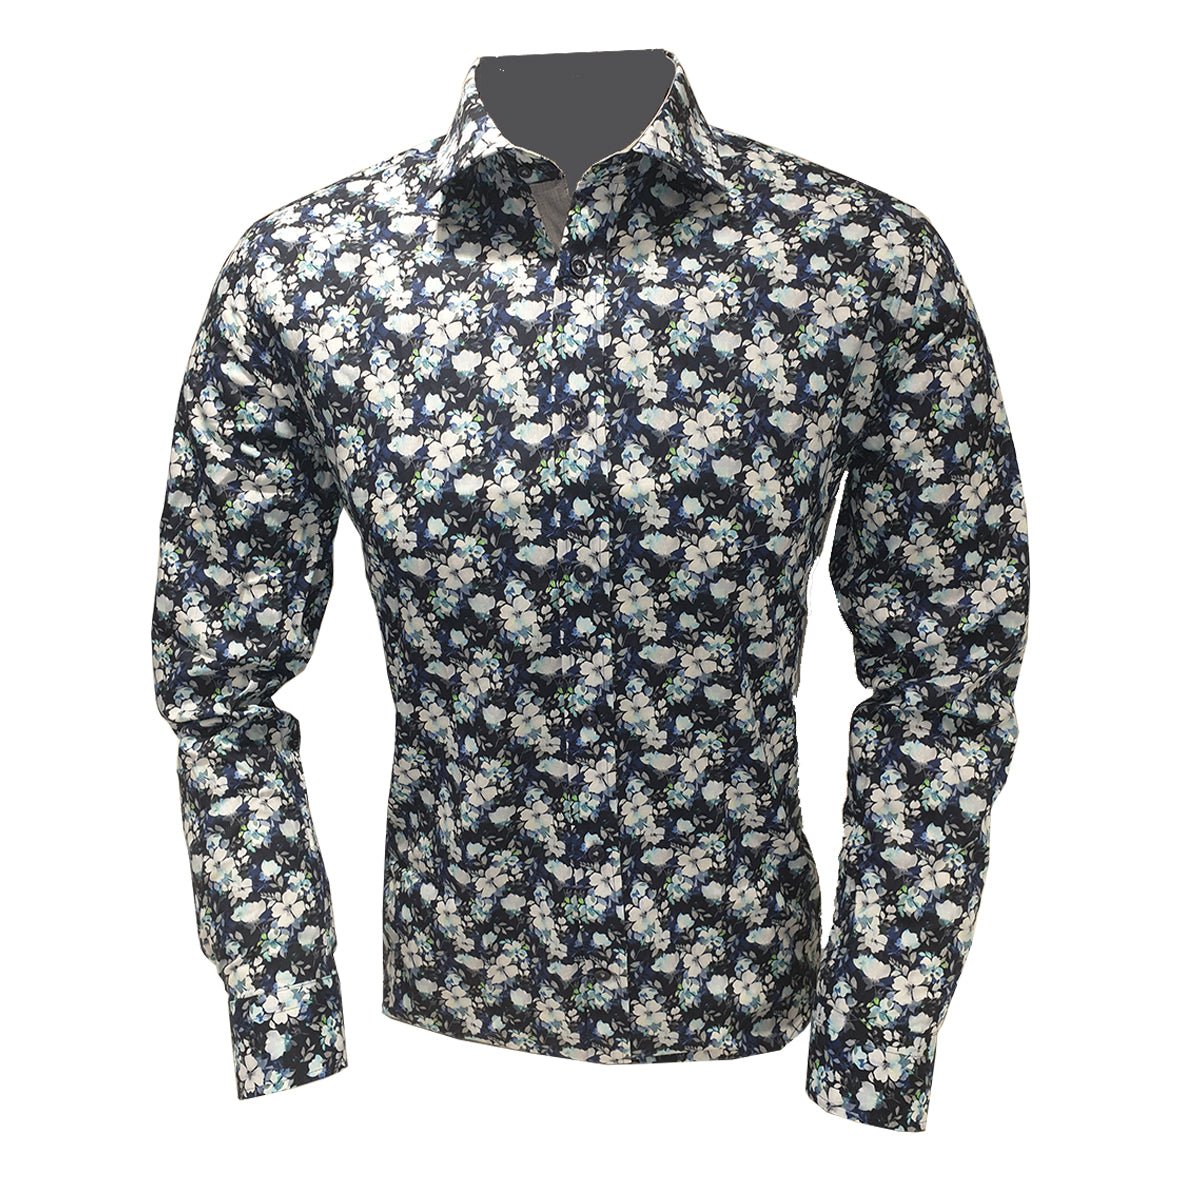 Thomson & Richards Bernado Shirt - Thomson's Suits Ltd - Multi - M - 43661